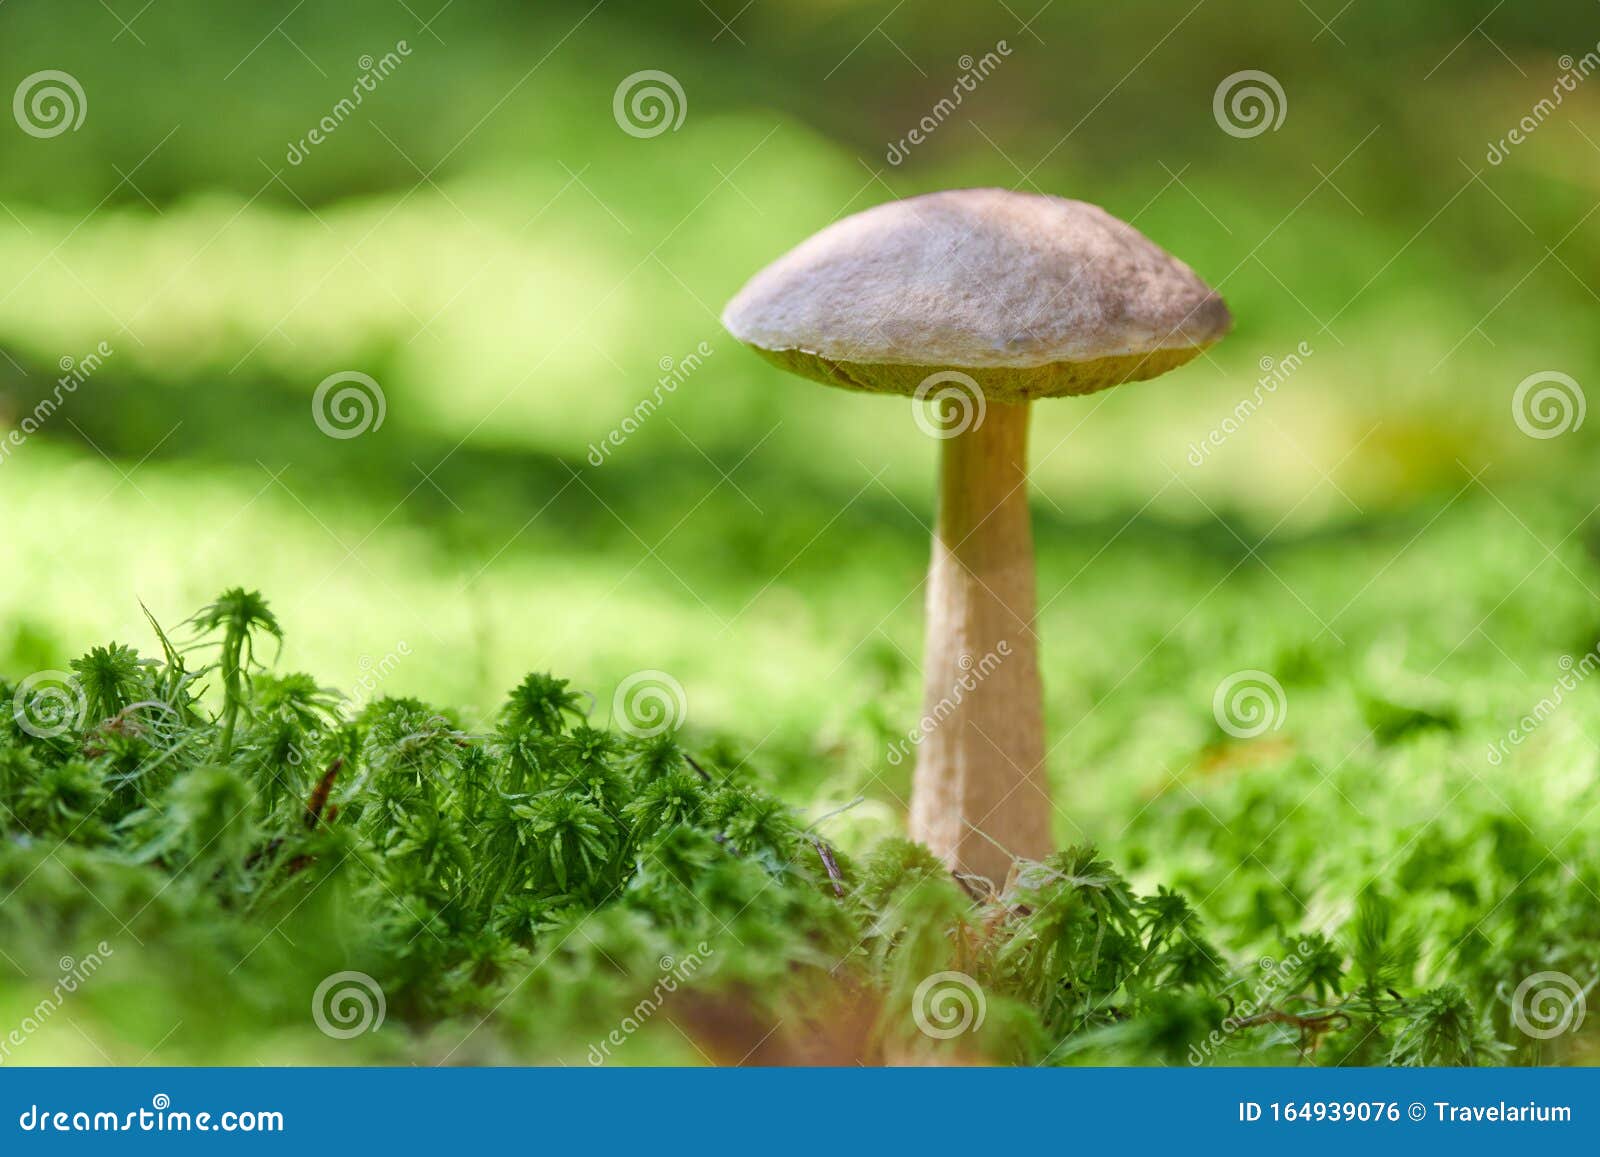 Birch Mushroom, Copy Space. Edible Fungus Growing in Moss. White Bog ...